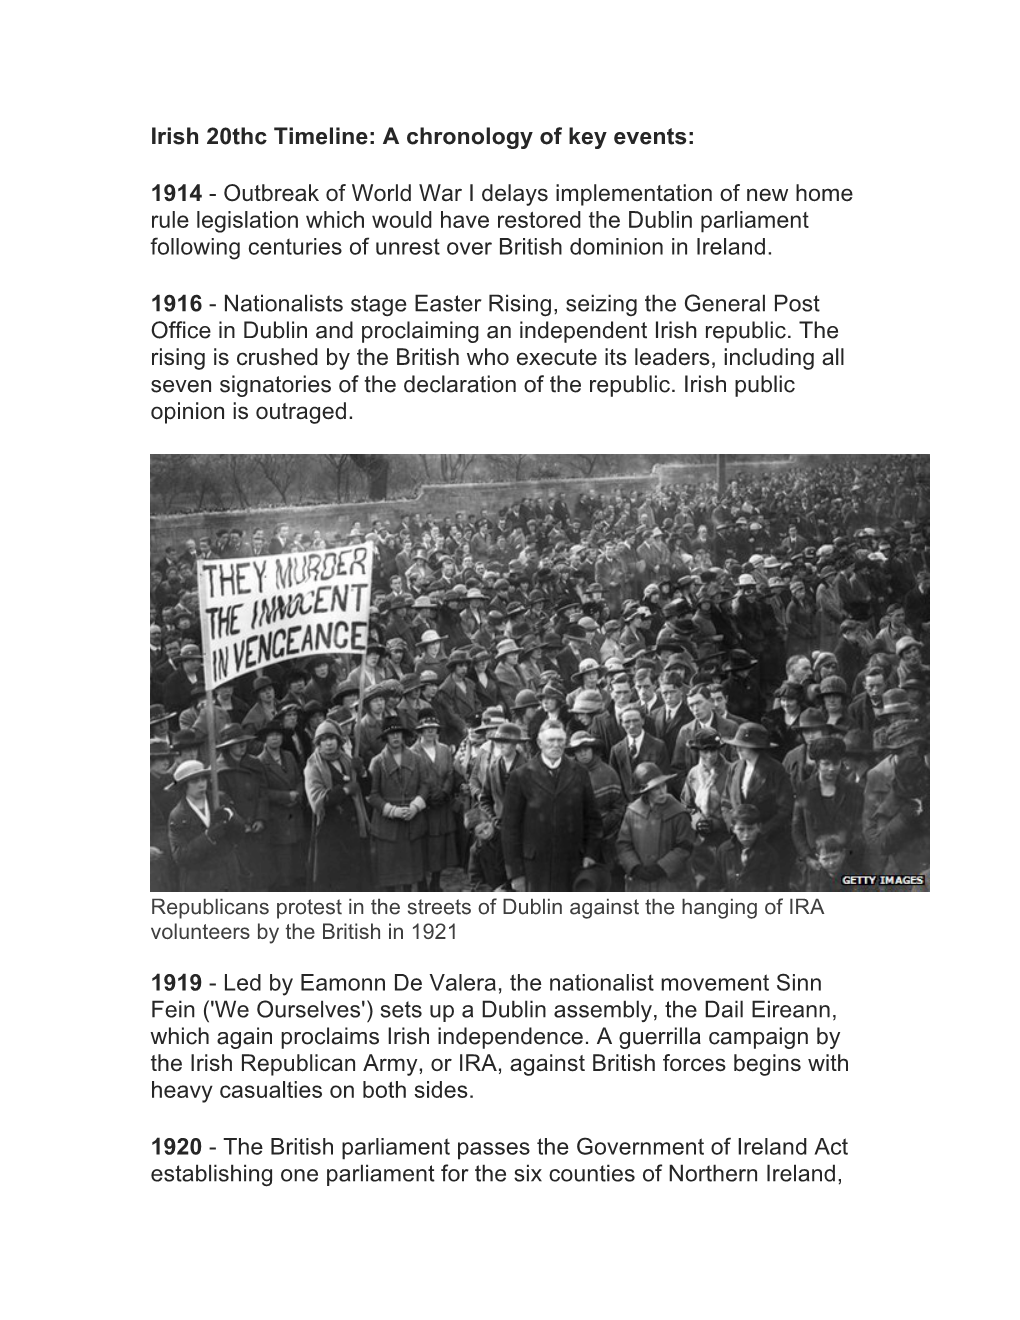 Irish 20Thc Timeline: a Chronology of Key Events